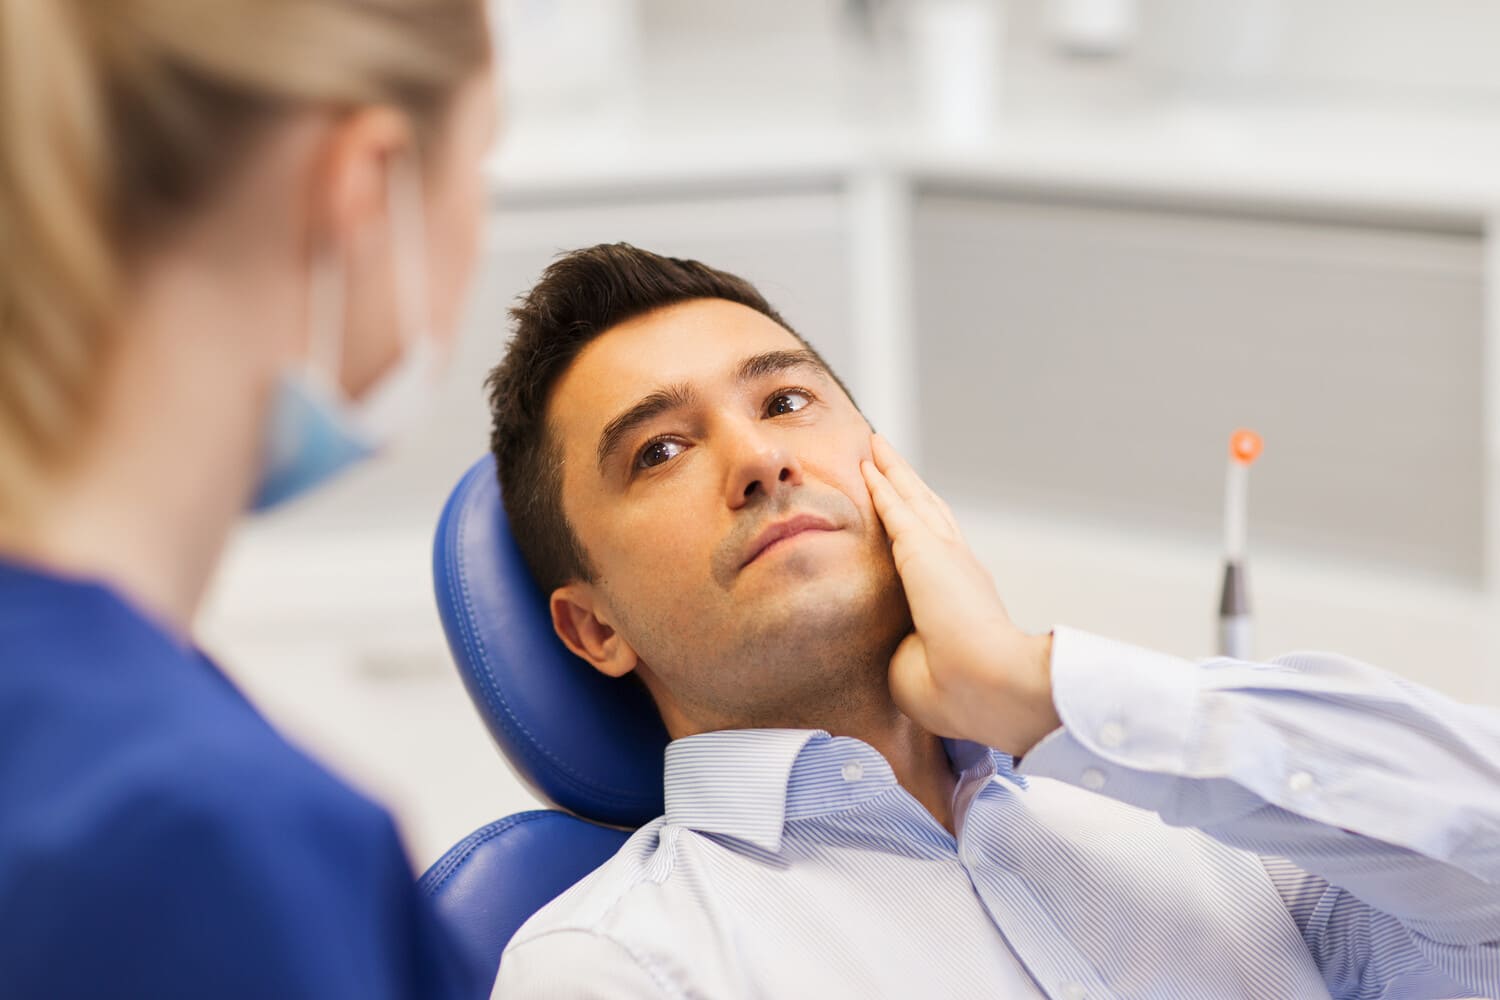 DOCS Dental wisdom teeth removal